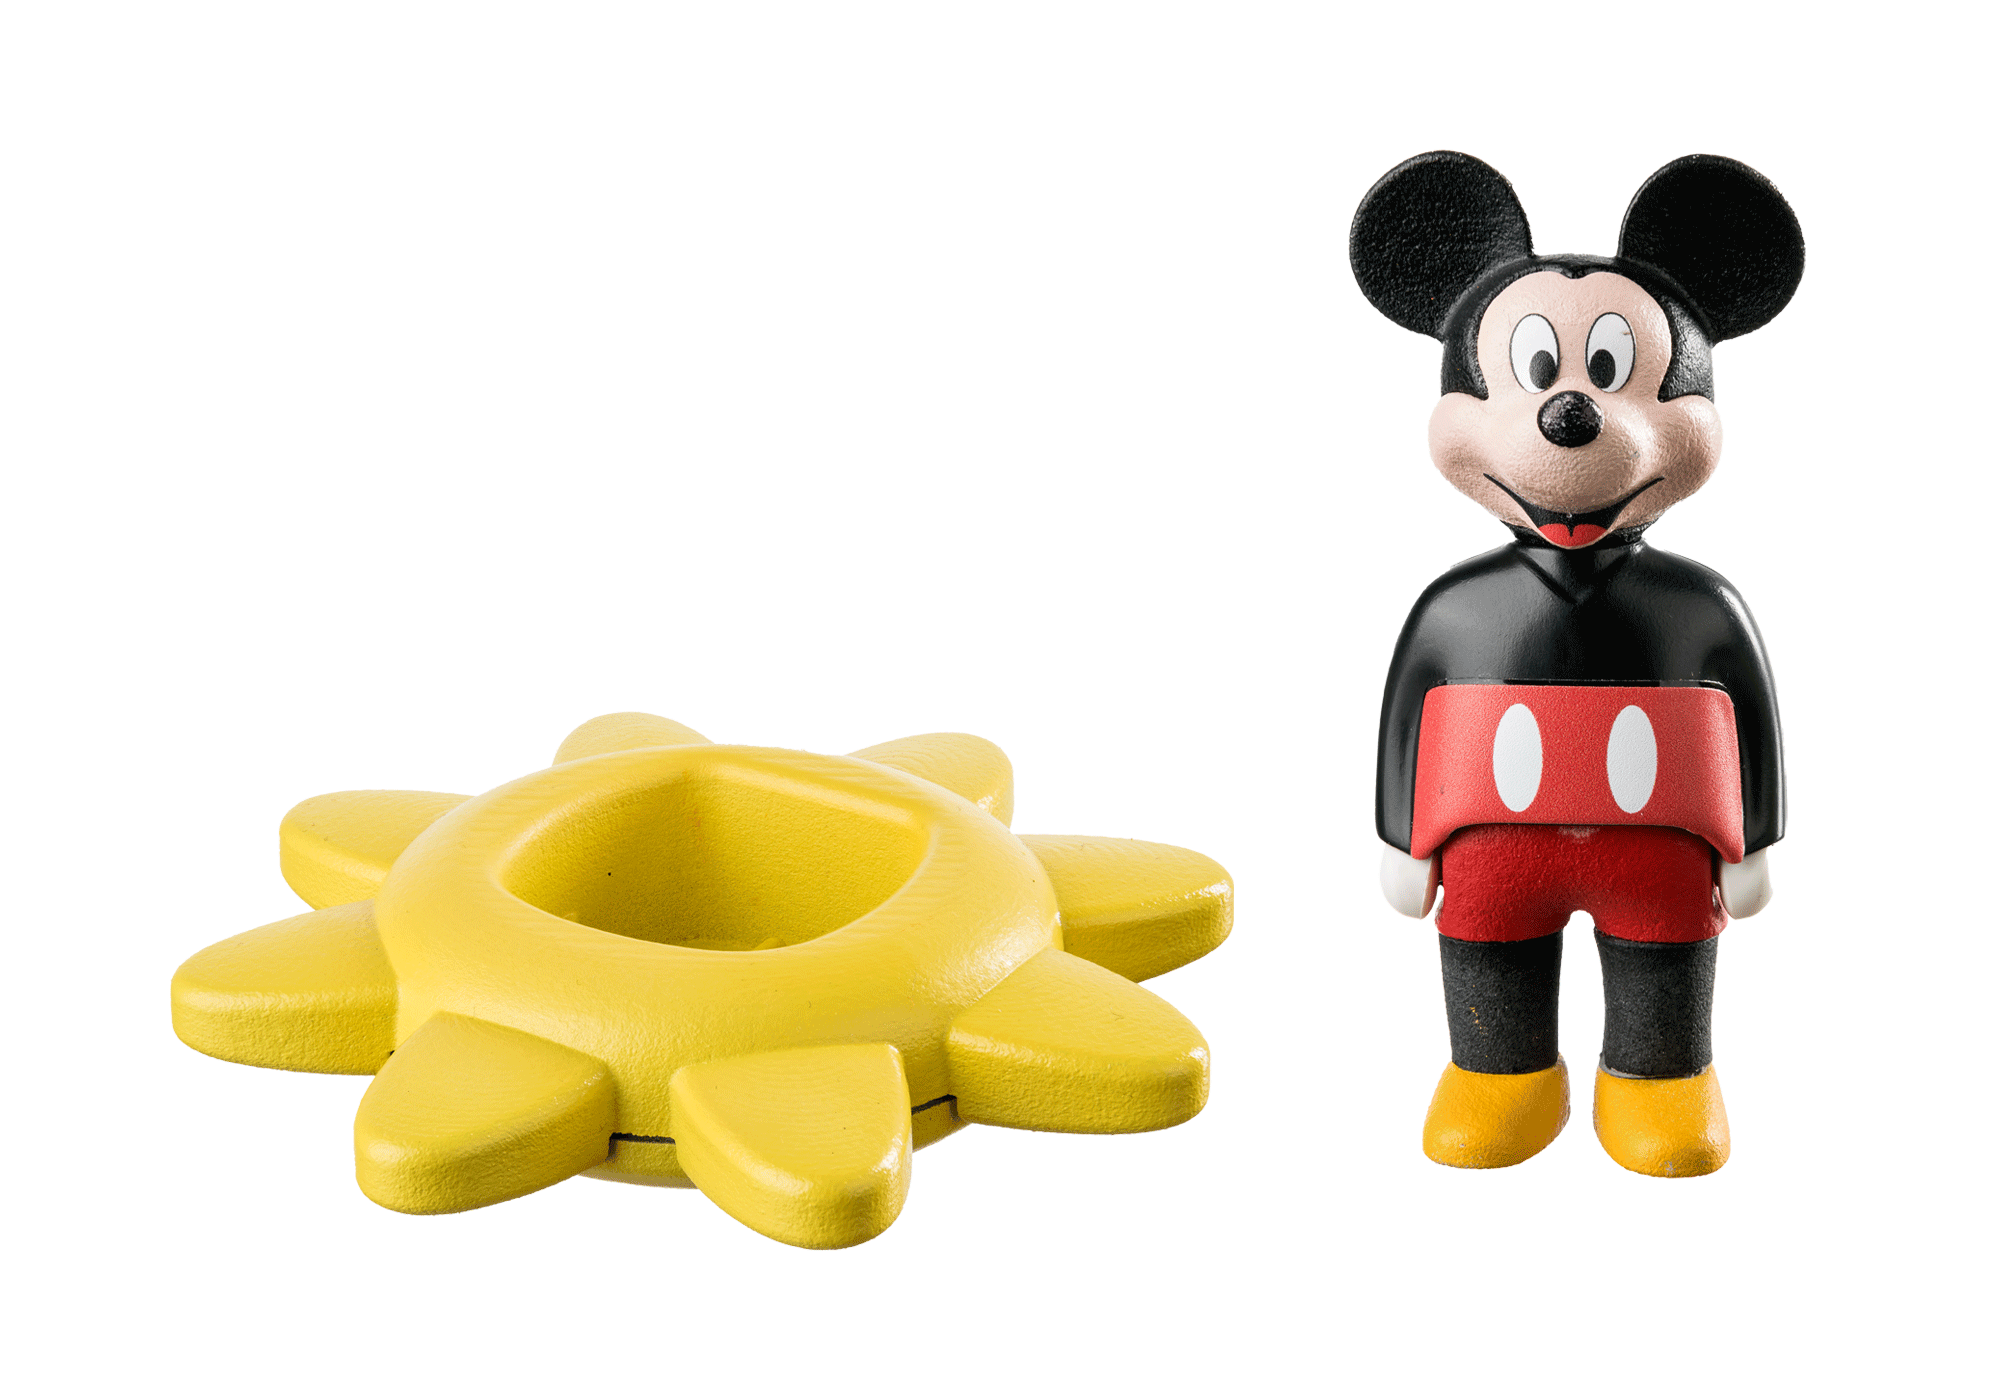 Playmobil-1.2.3. & Disney: Mickey's Spinning Sun w/Rattle-71321-Legacy Toys